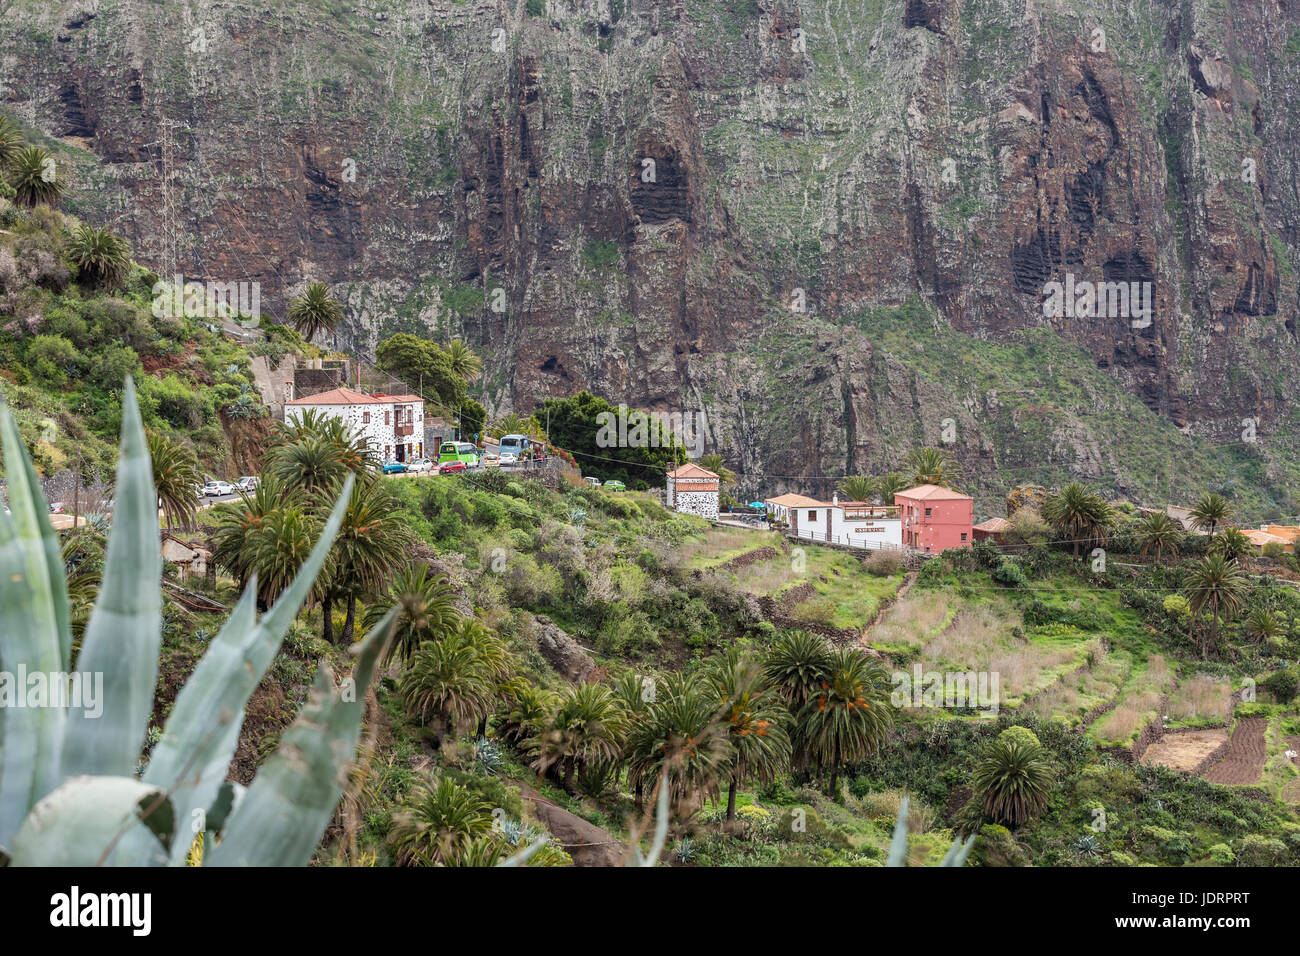 Masca barranco, gorge, in Tenerife, Canary Islands Stock Photo